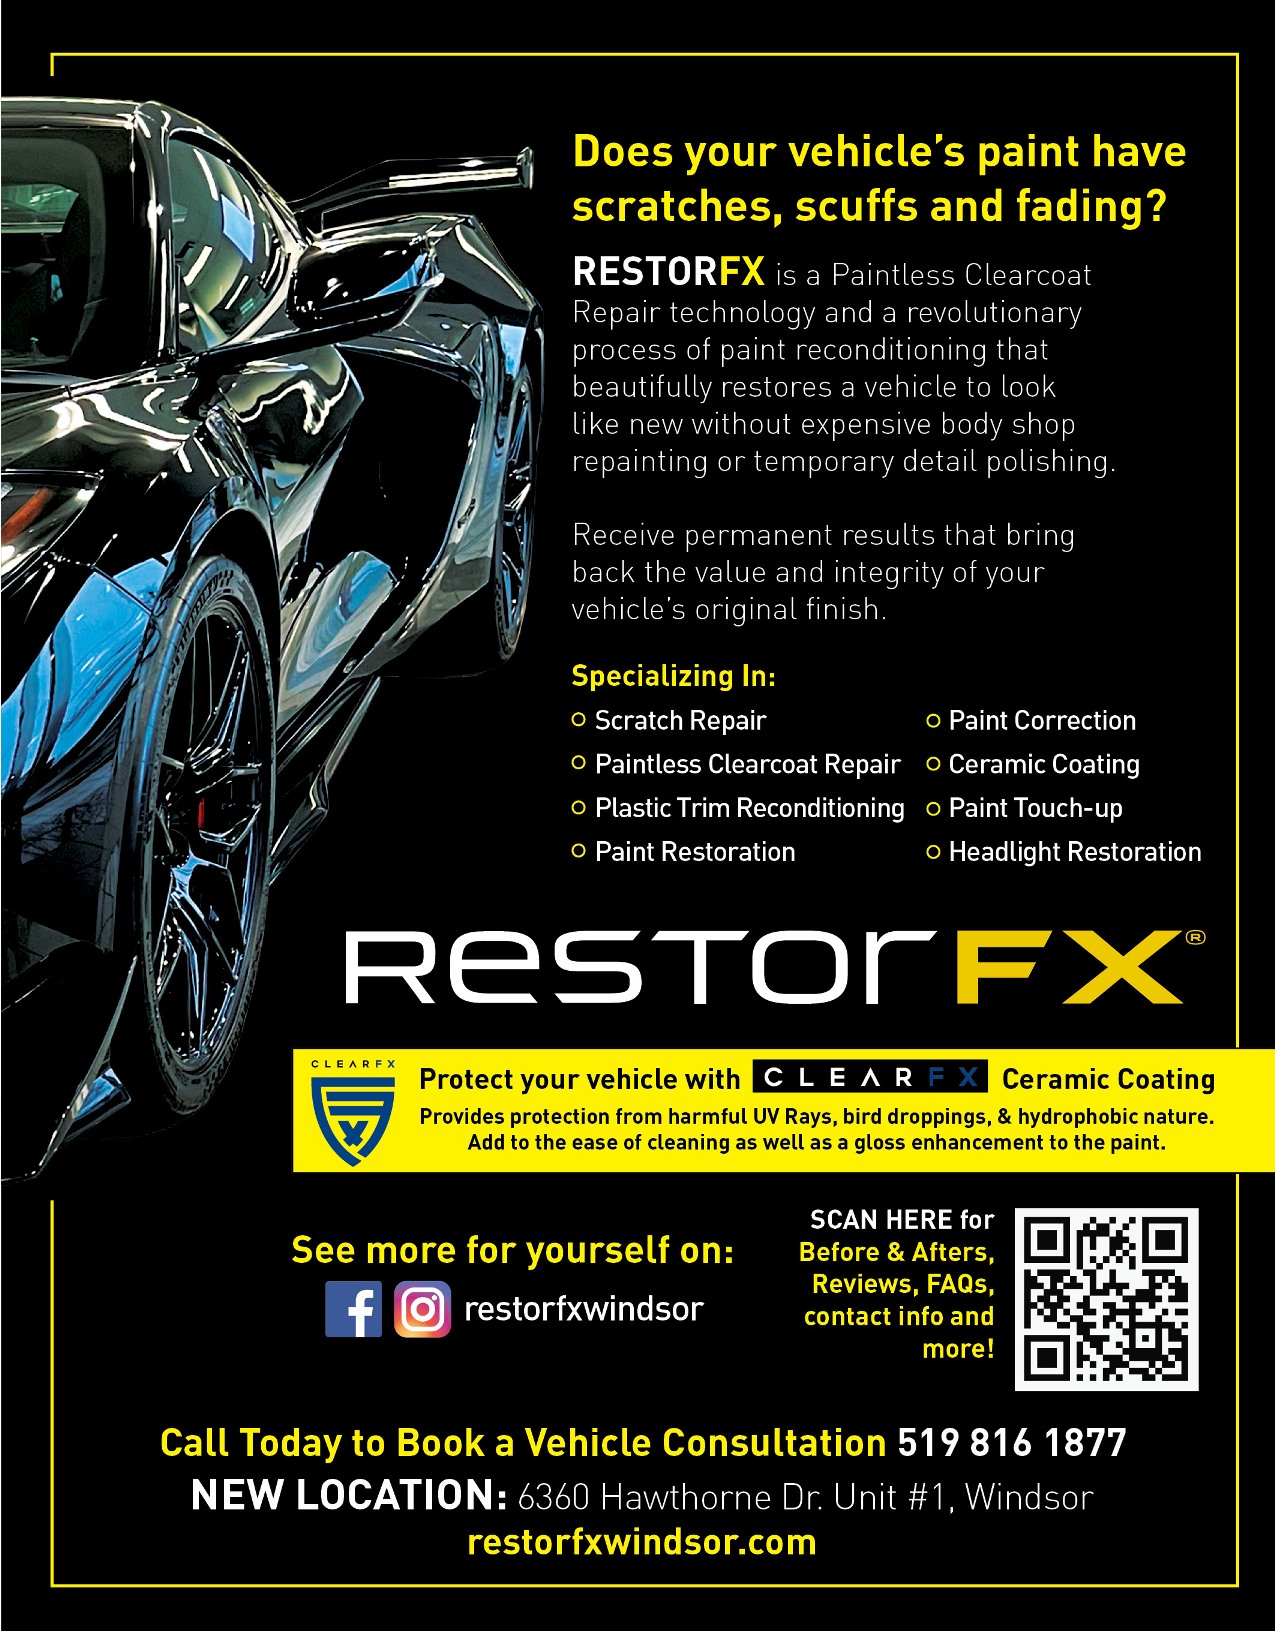 RestorFX Windsor